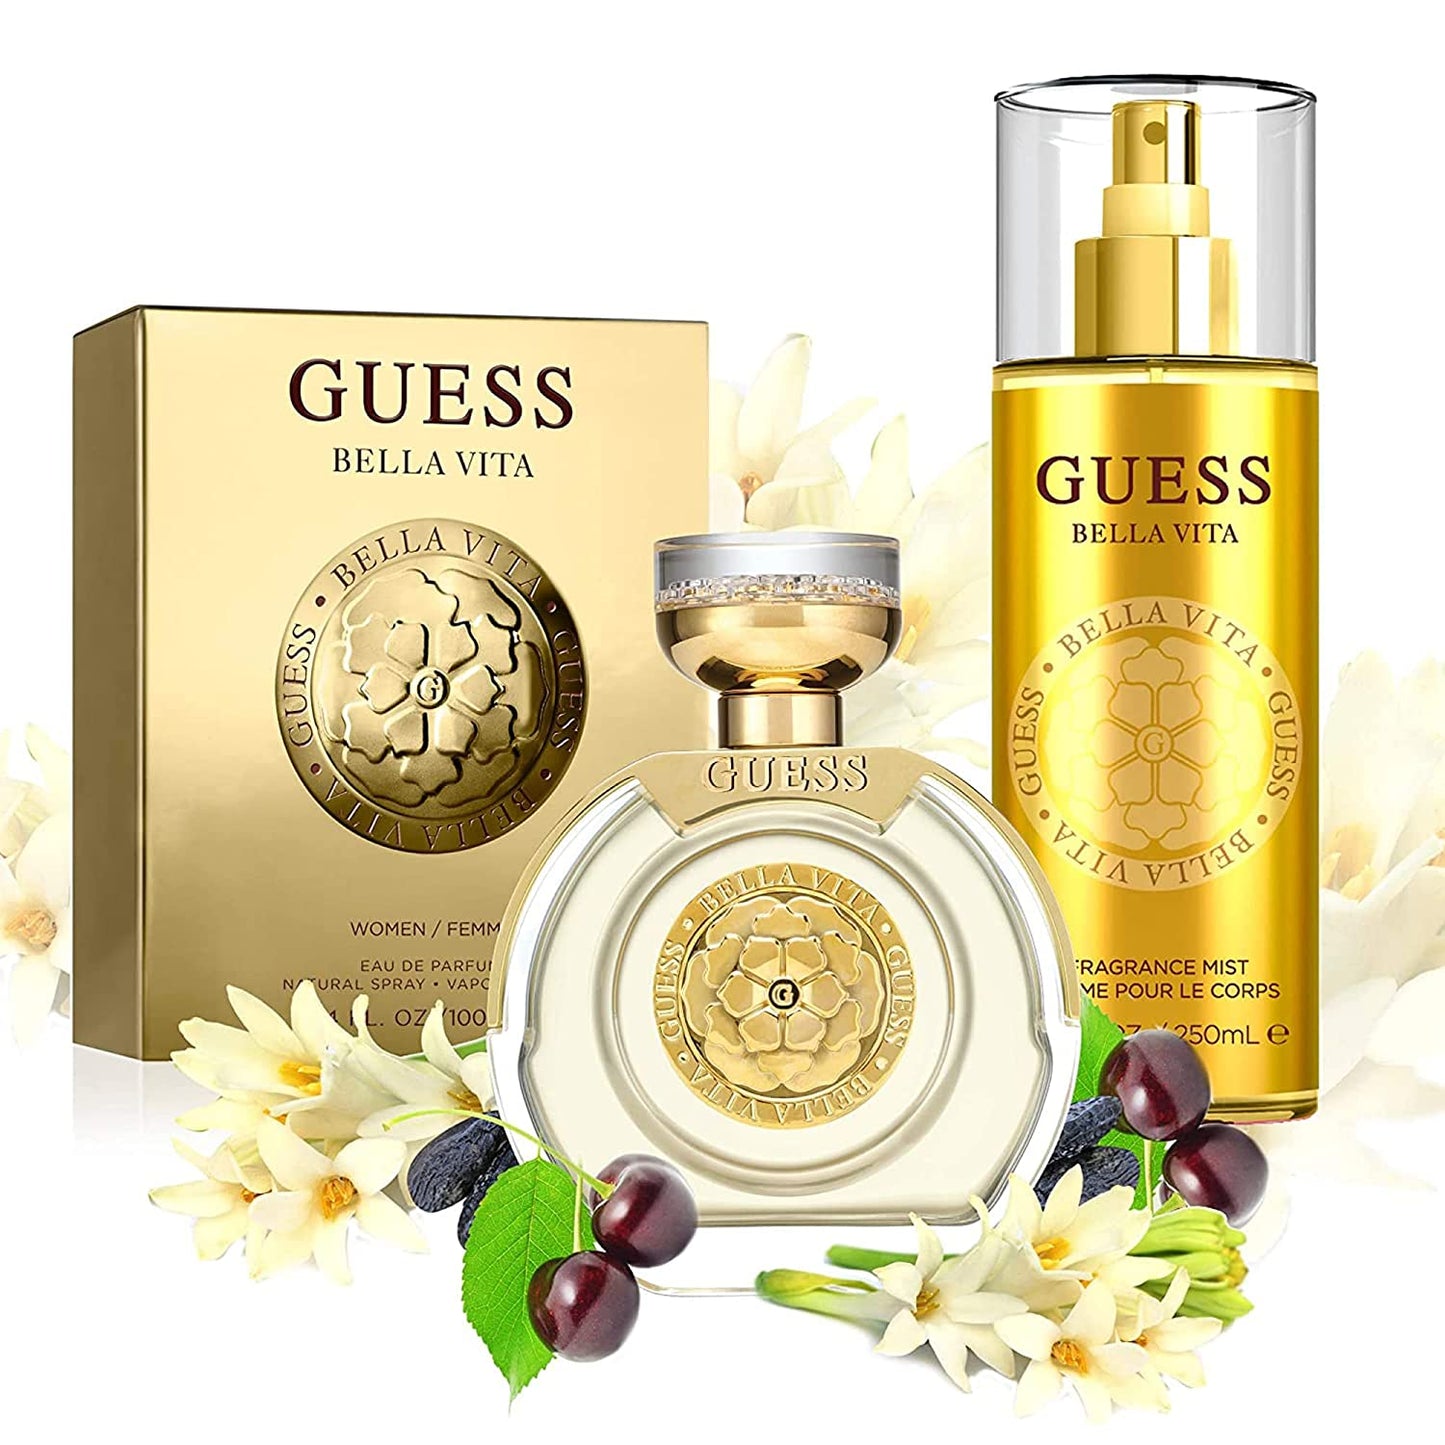 GUESS Bella Vita Eau de Parfum Perfume Spray For Women, 1.7 Fl. Oz.